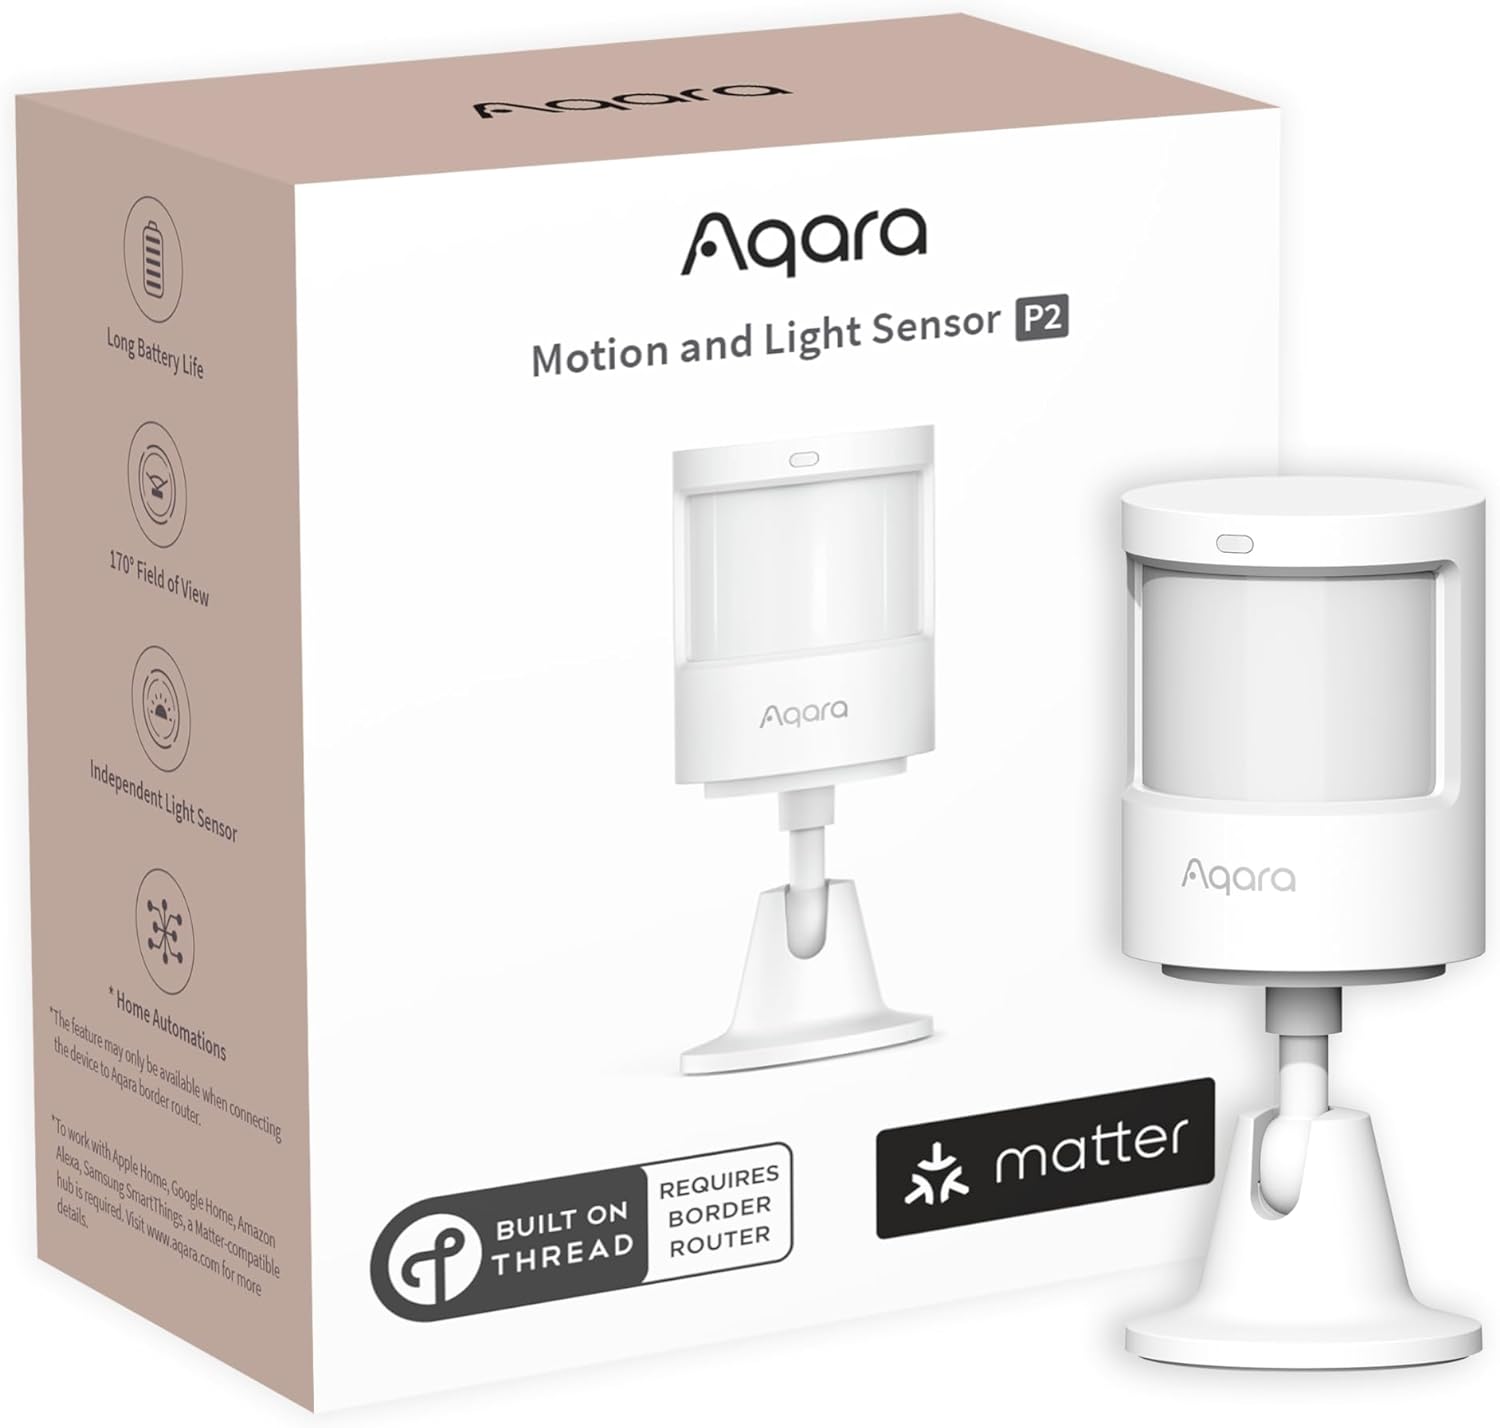 Aqara Motion and Light Sensor P2 with box